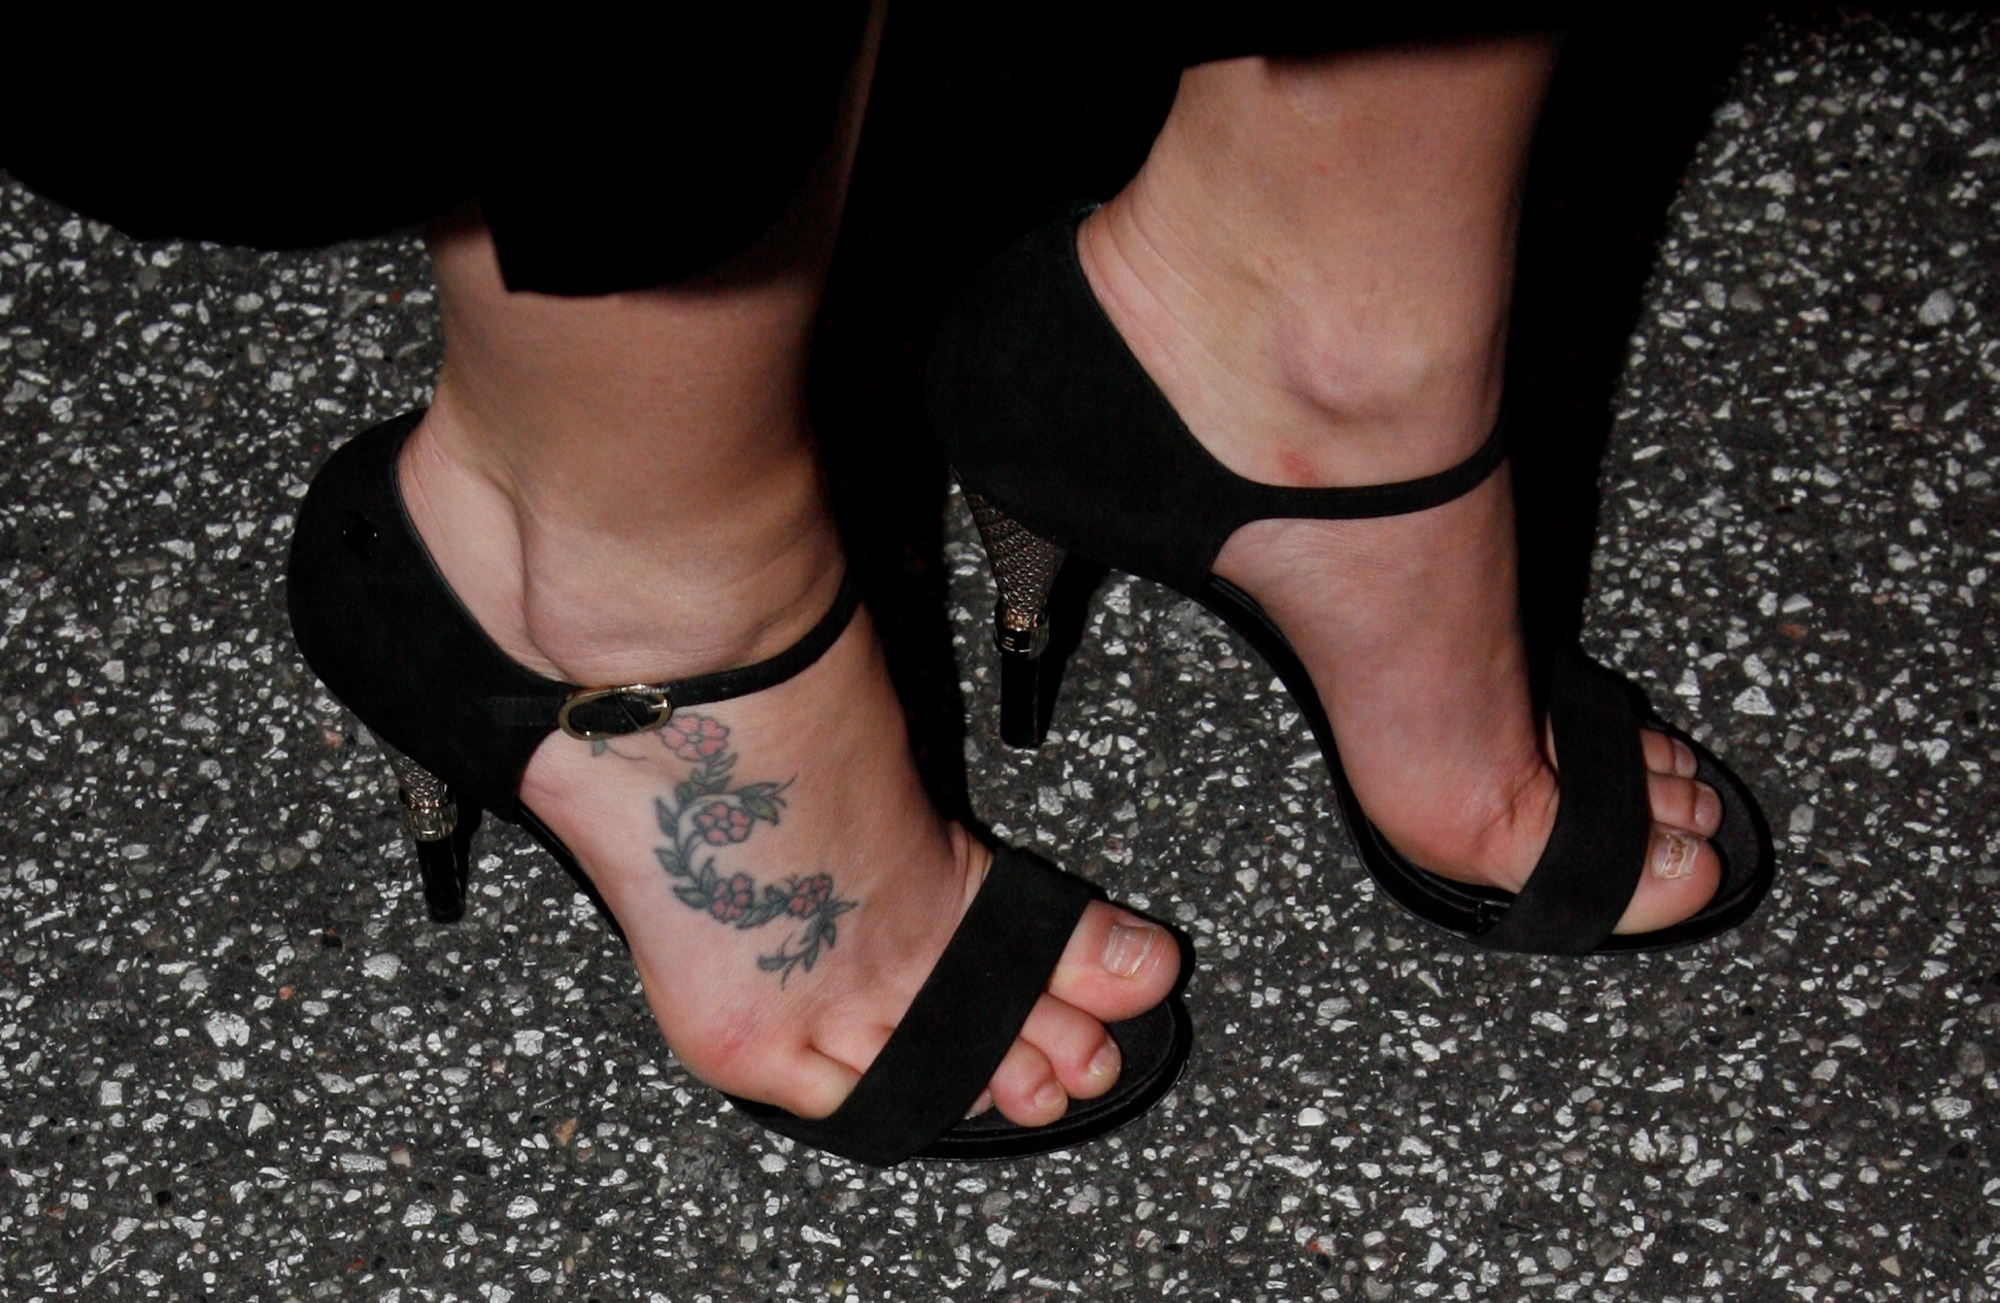 People who liked Kaya Scodelario's feet, also liked.